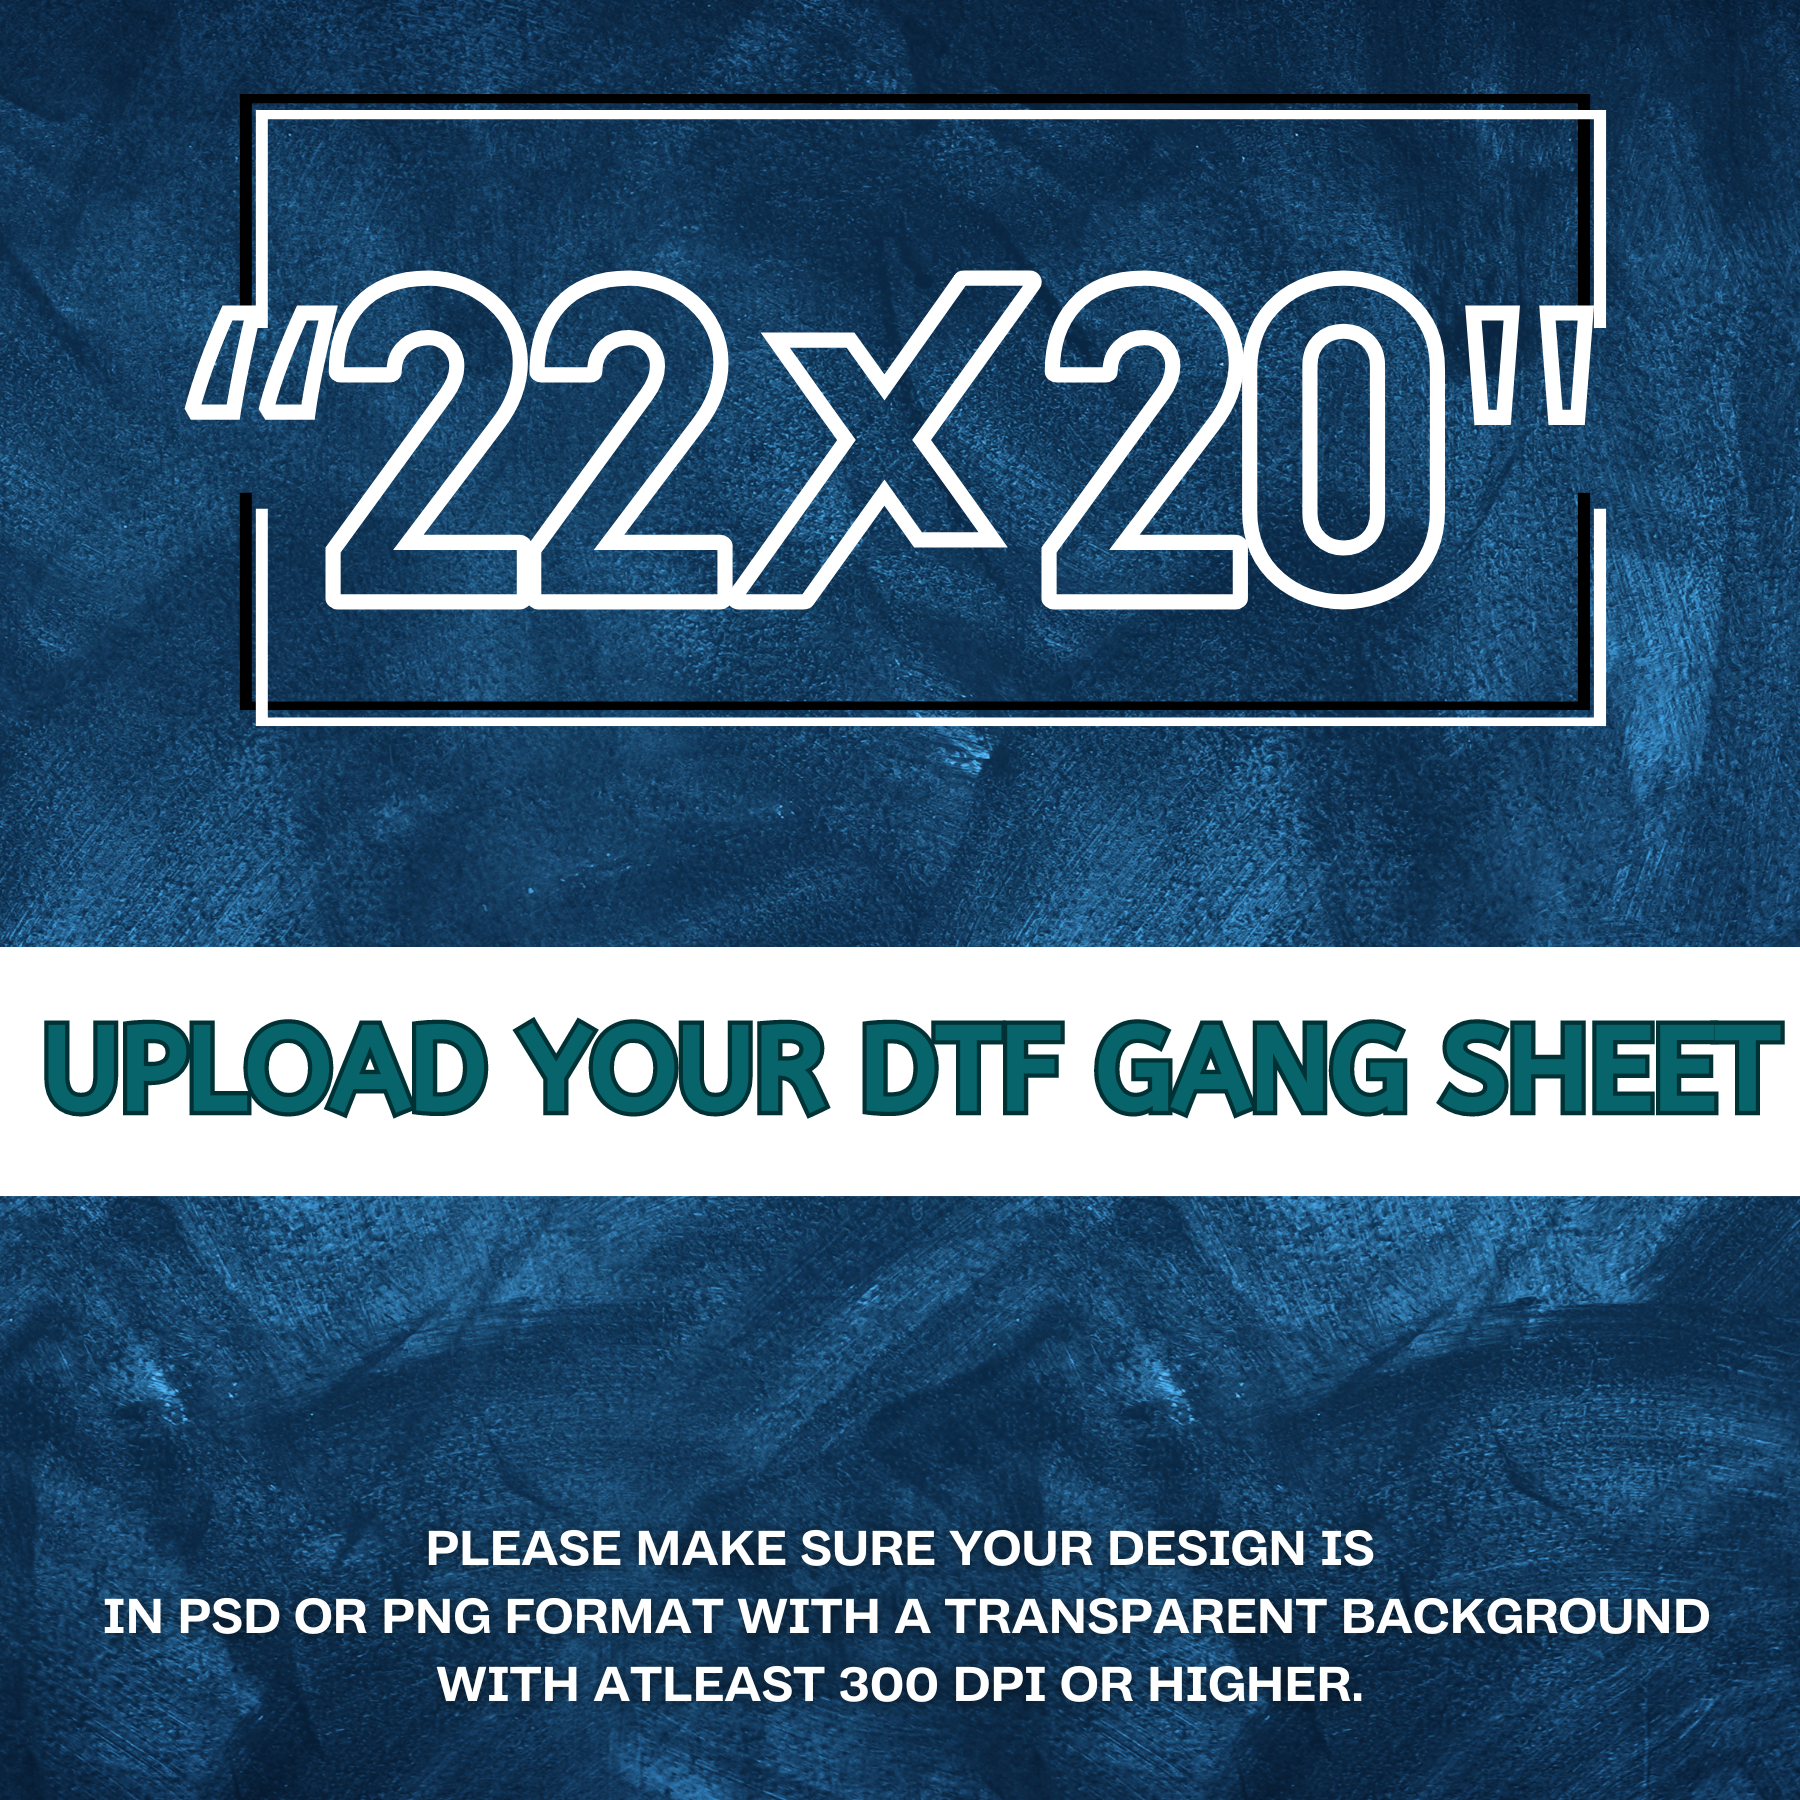 22 x 20 dtf gang sheet